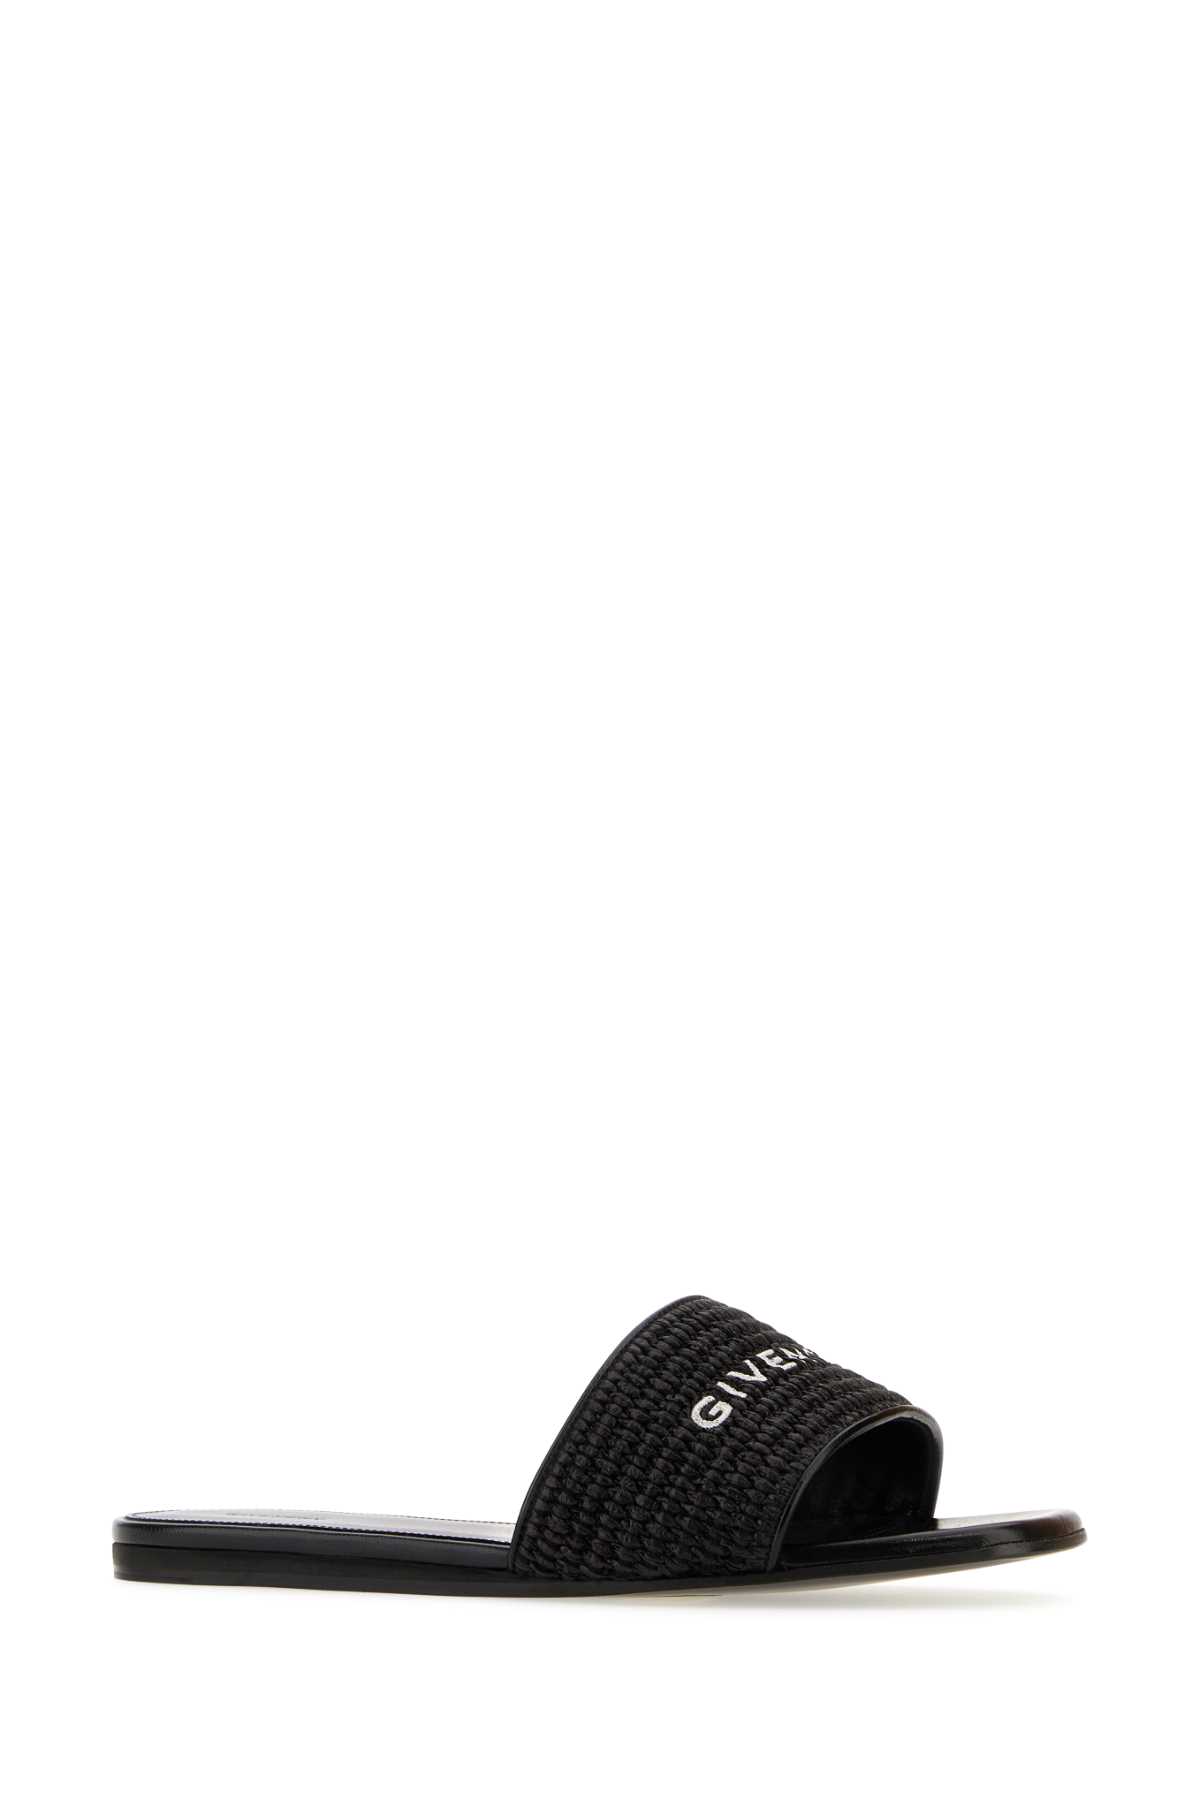 Givenchy Black Raffia 4g Slippers In Black/white